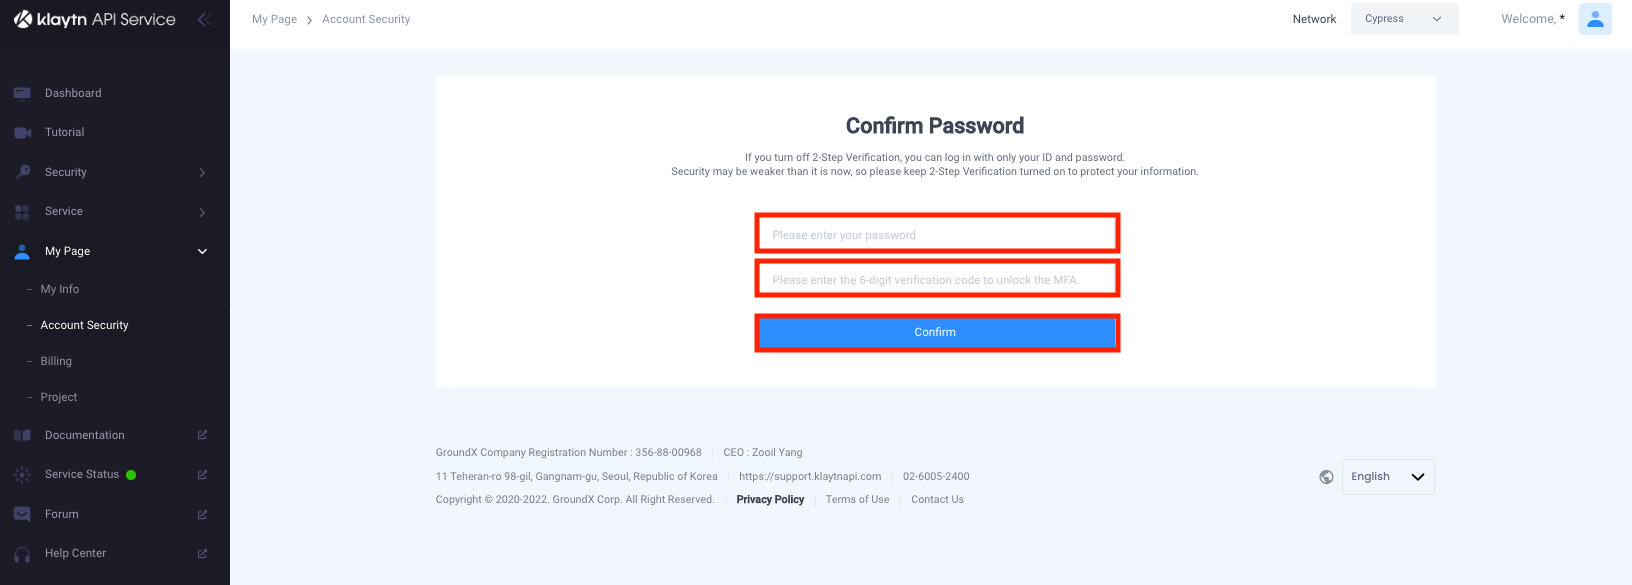 Confirm_Password_1.png